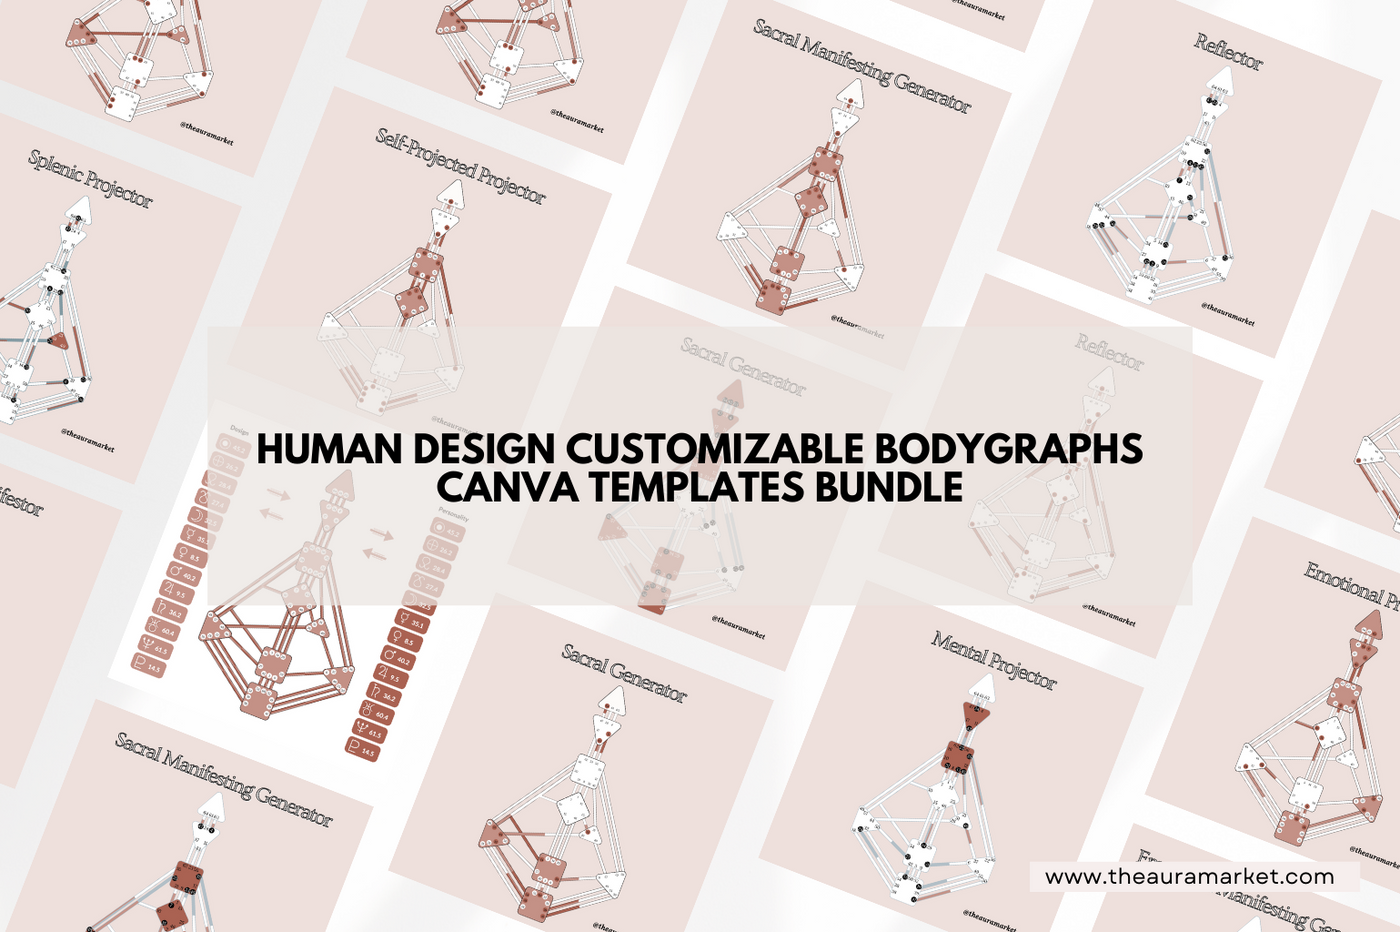 Digital Ultimate Human Design and Gene Keys Canva Templates Bundle